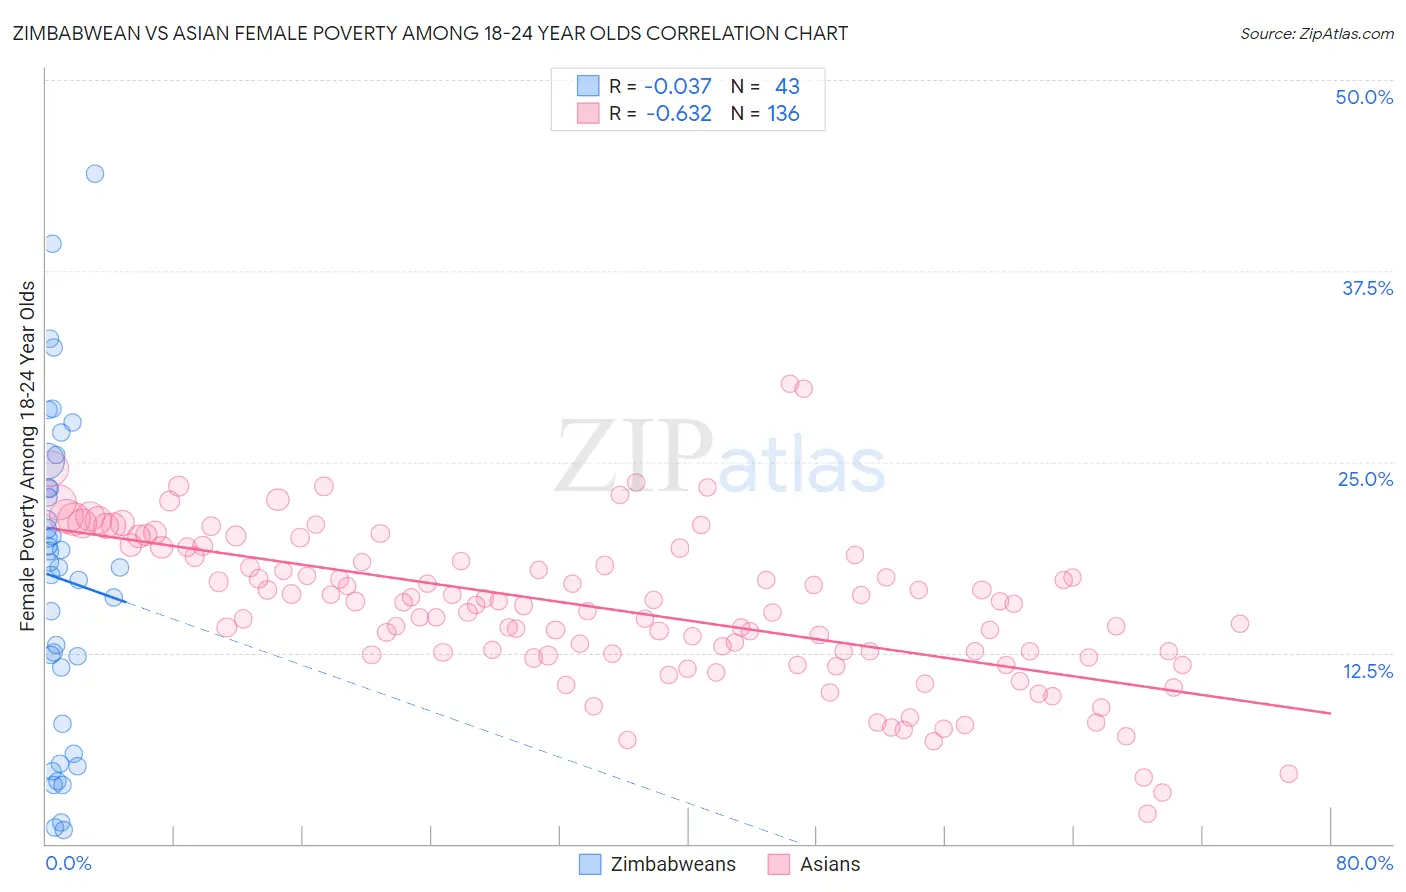 Zimbabwean vs Asian Female Poverty Among 18-24 Year Olds